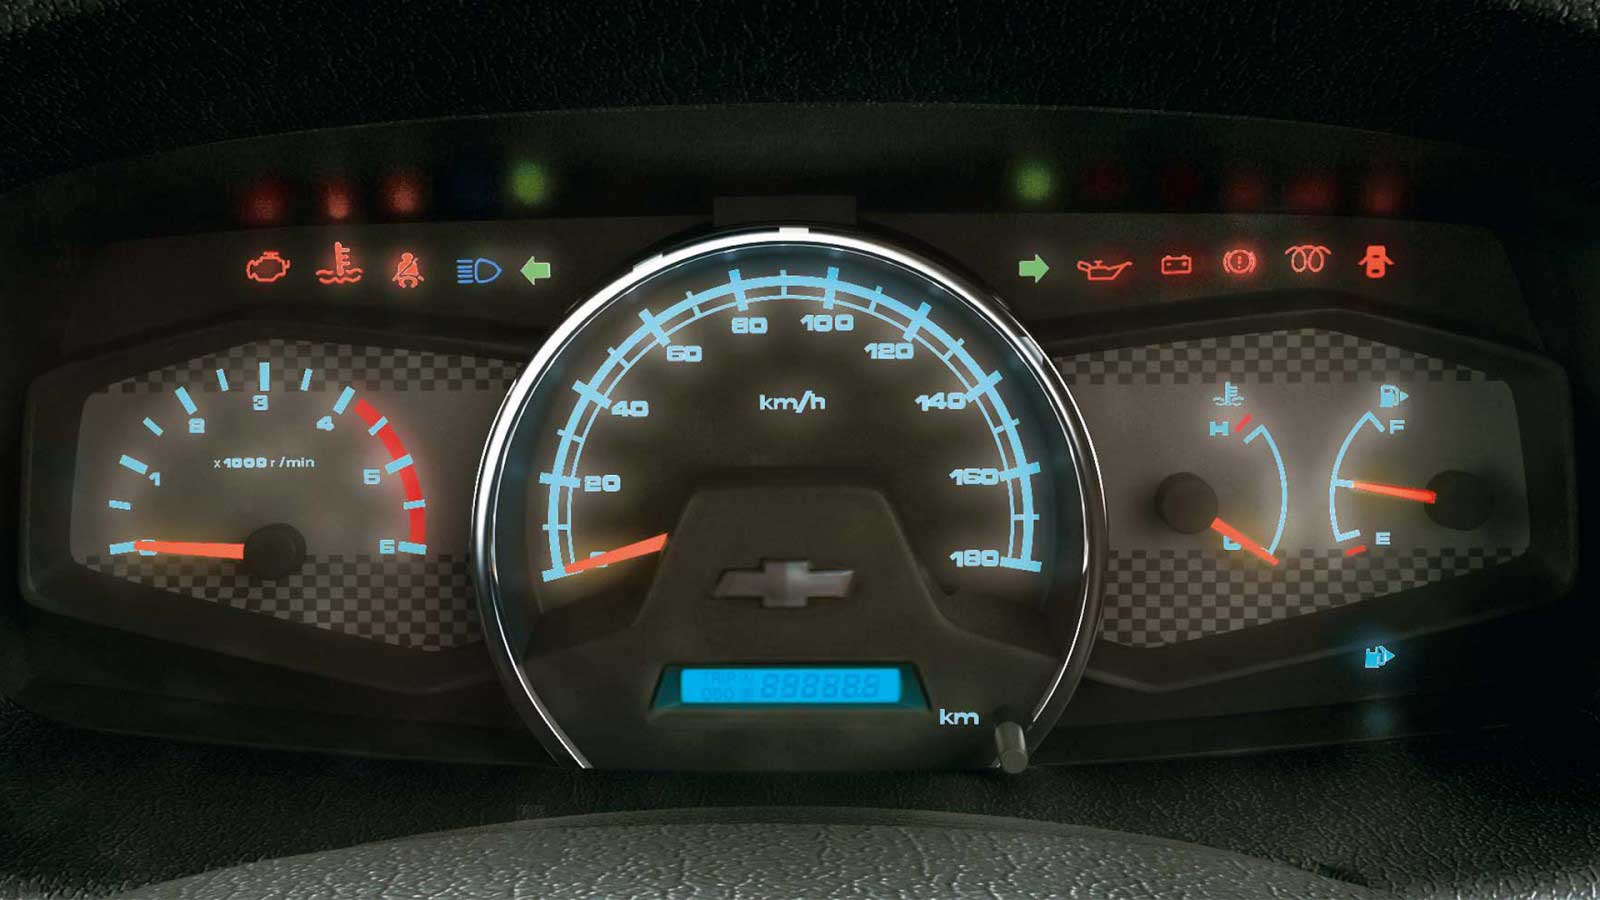 Chevrolet Tavera Neo 3 Lt 9 Str Bsiii Interior Image Gallery